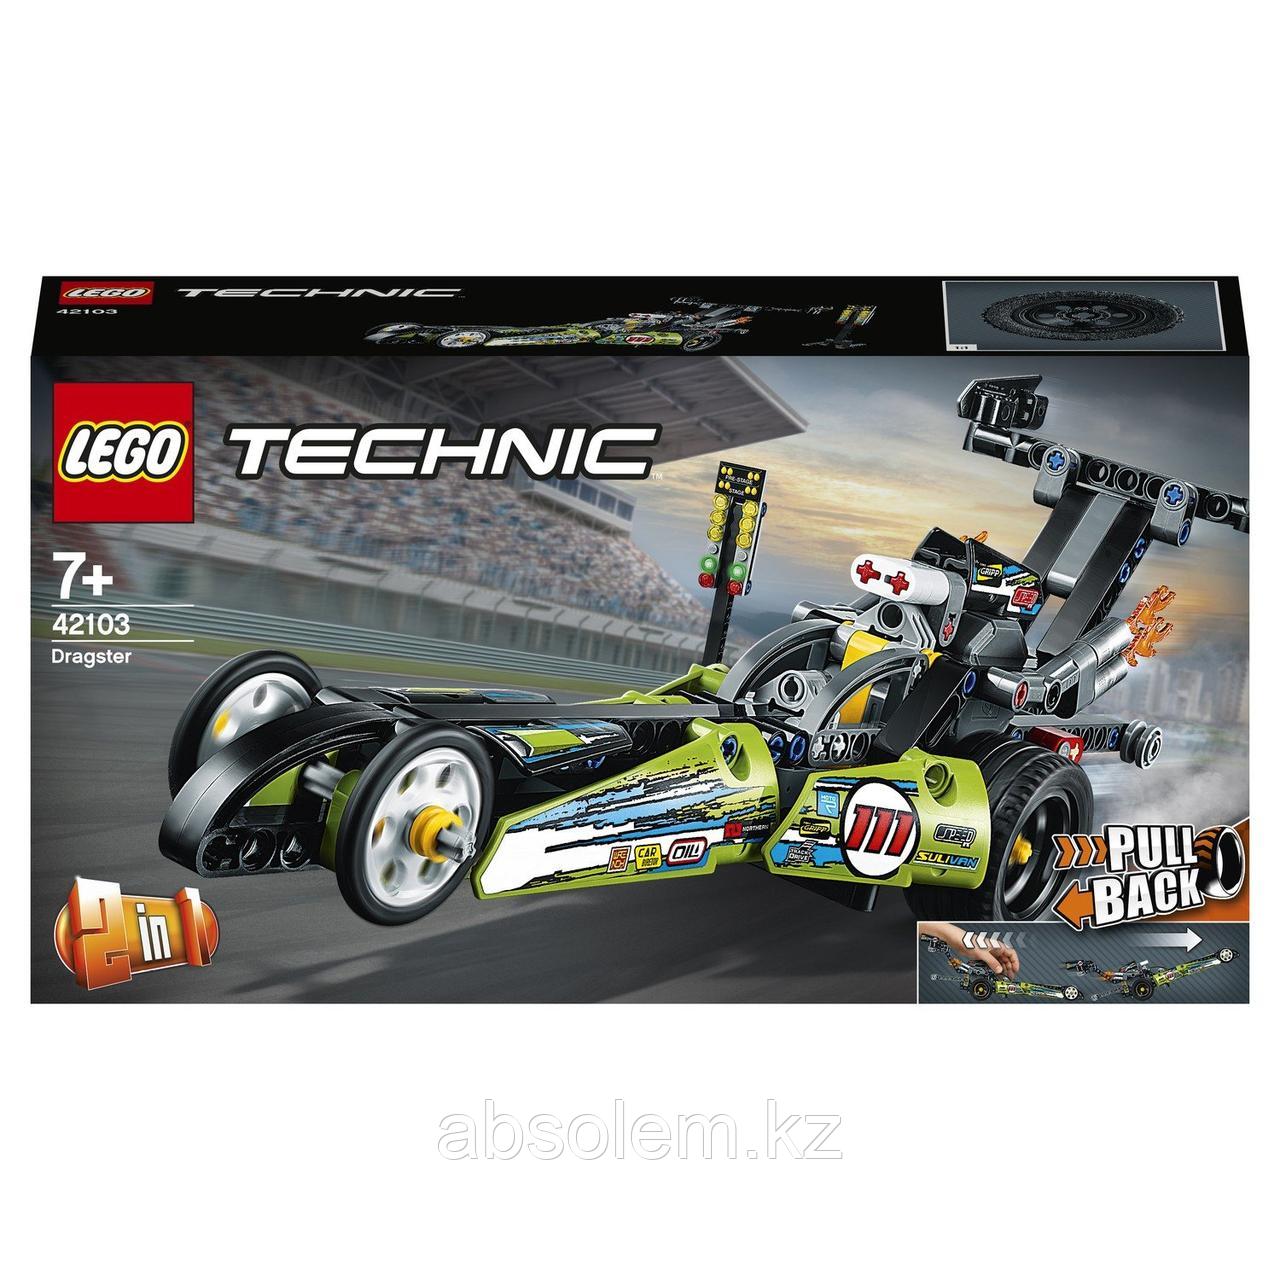 LEGO 42103 Technic Драгстер